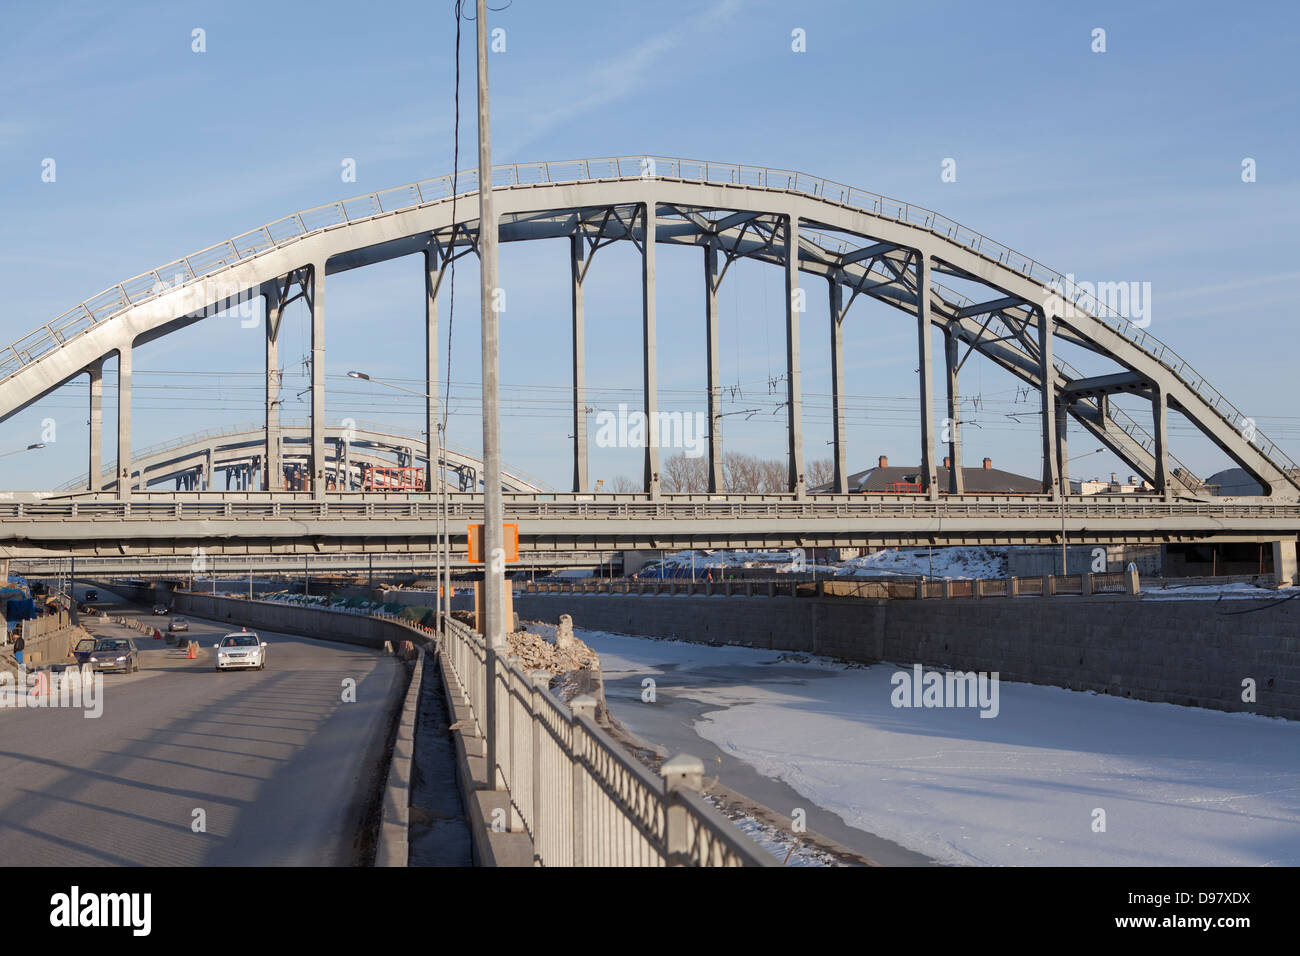 American Bridge (Nikolaev railway bridge) - a group of railway bridges in Saint-Petersburg, Russia Stock Photo